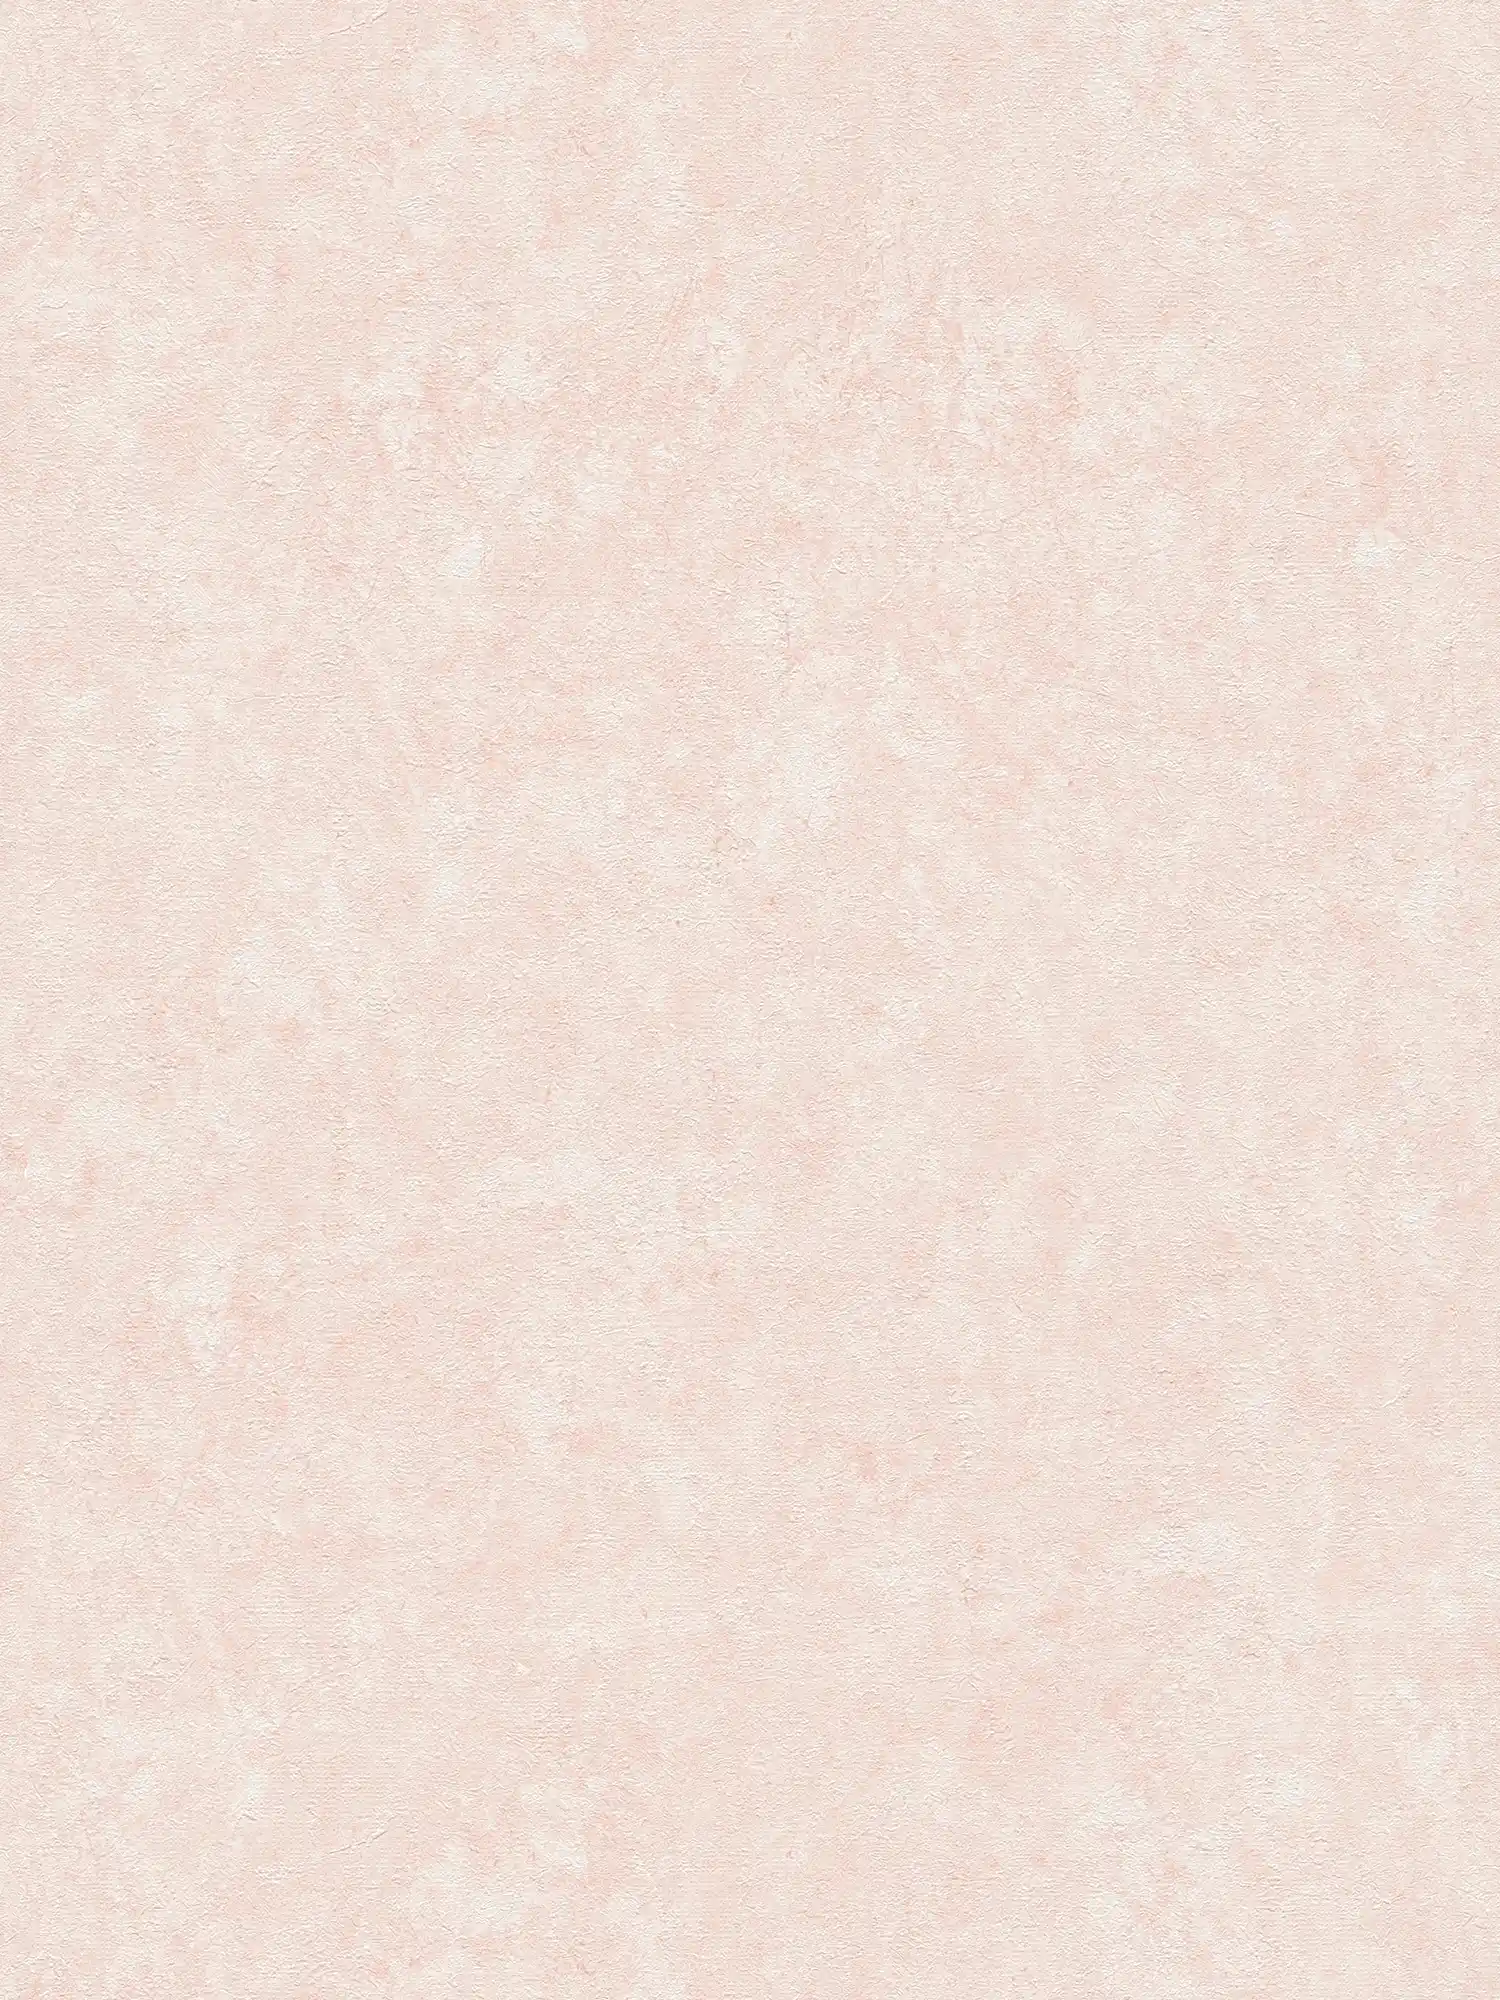 Plain textured wallpaper in a subtle colour - white, pink
